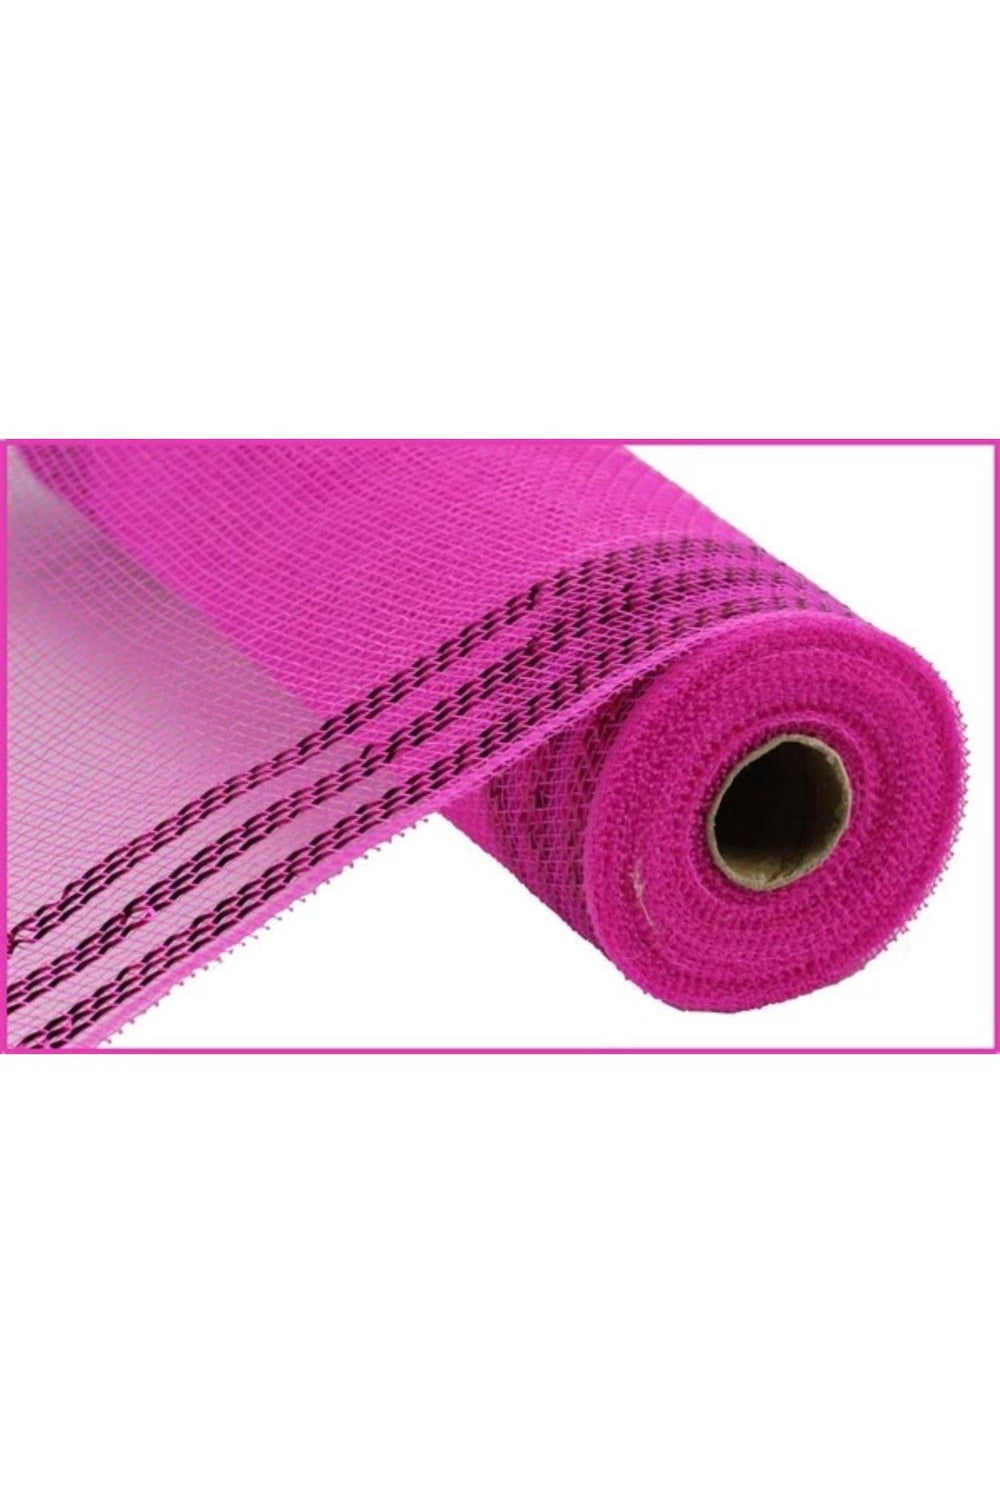 10.25" Border Stripe Metallic Mesh: Hot Pink (10 Yards) - Michelle's aDOORable Creations - Poly Deco Mesh